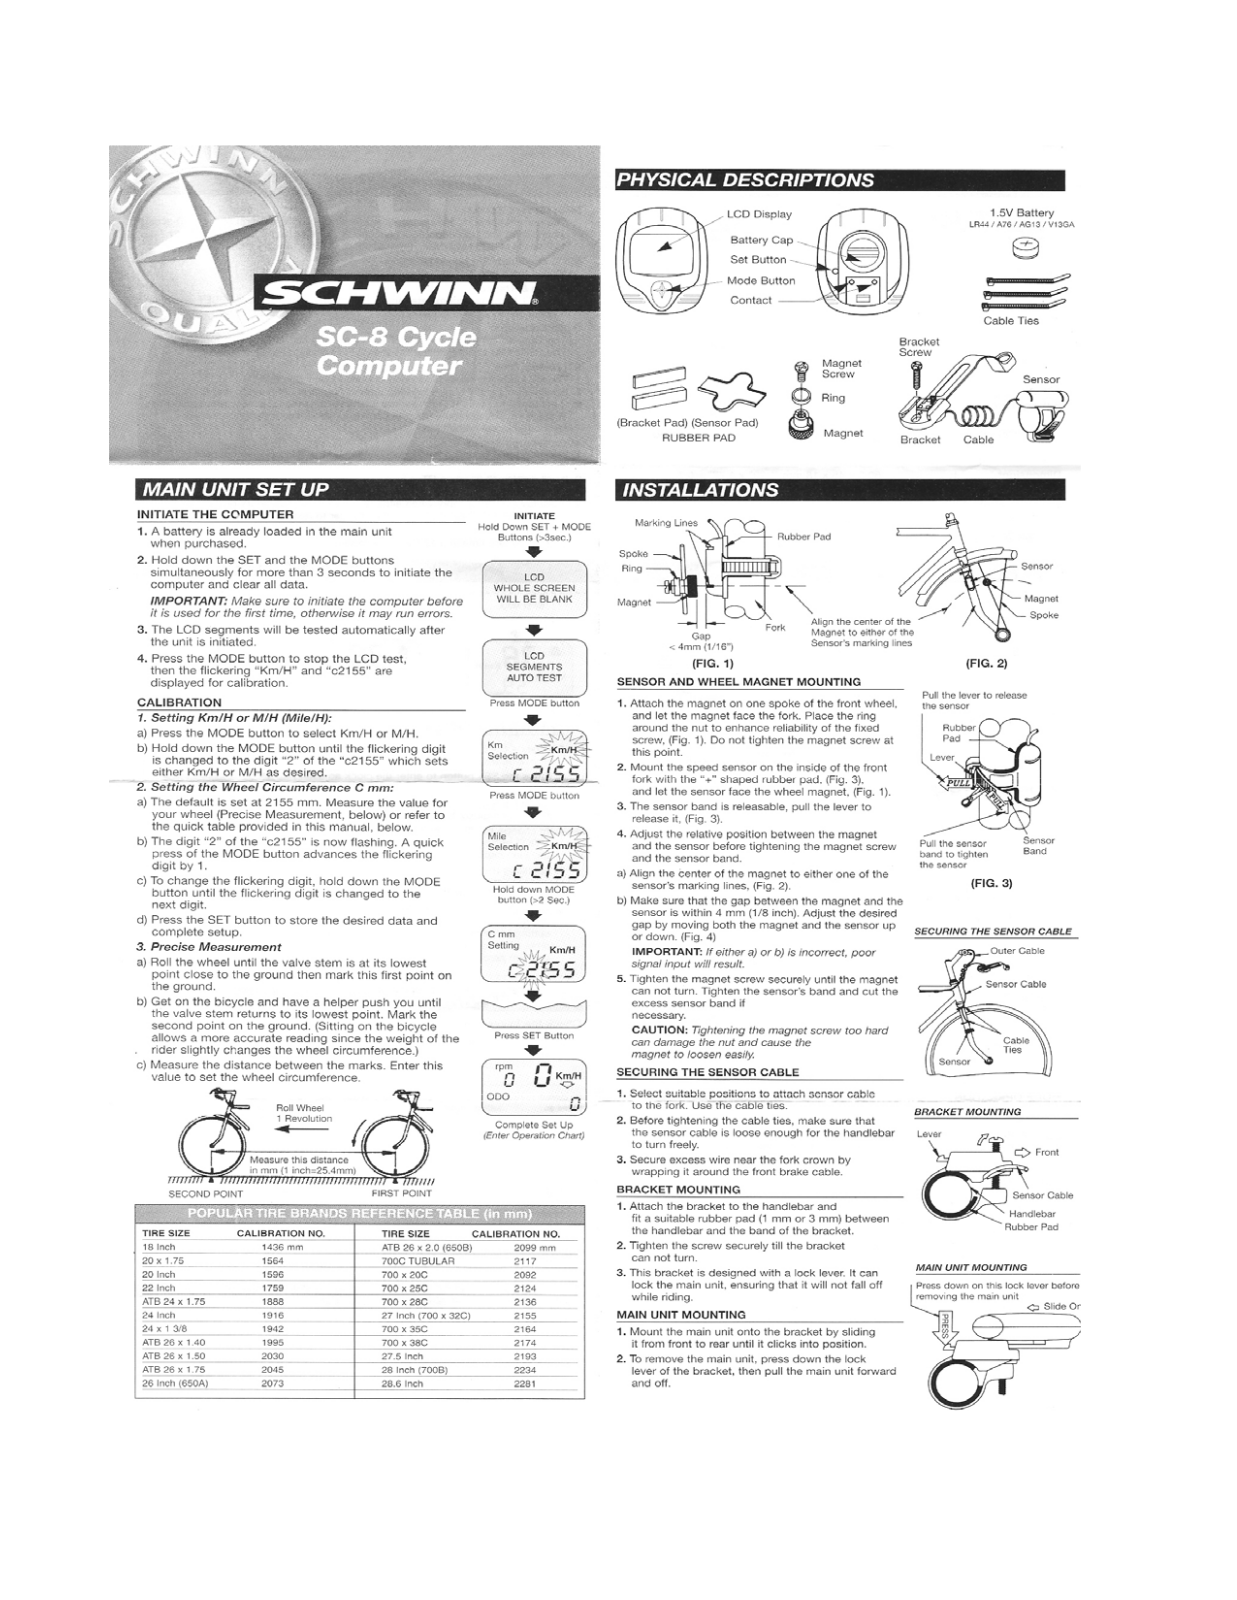 Schwinn SC-8 User Manual